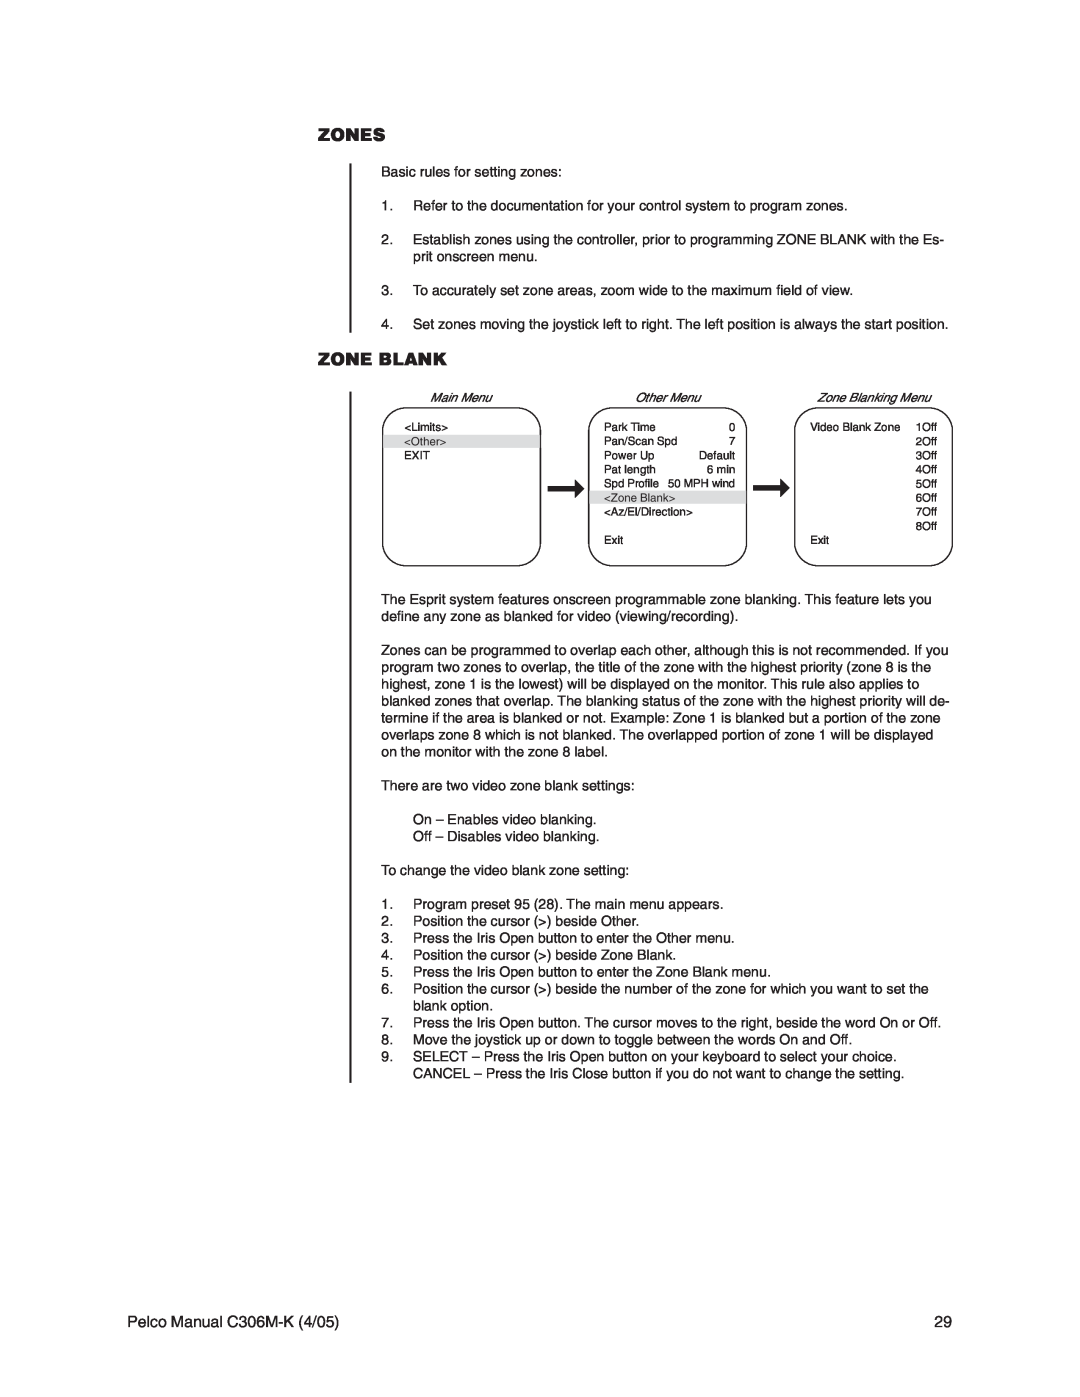 Pelco es3012 installation manual Zone Blank, Zones, Pelco Manual C306M-K4/05 